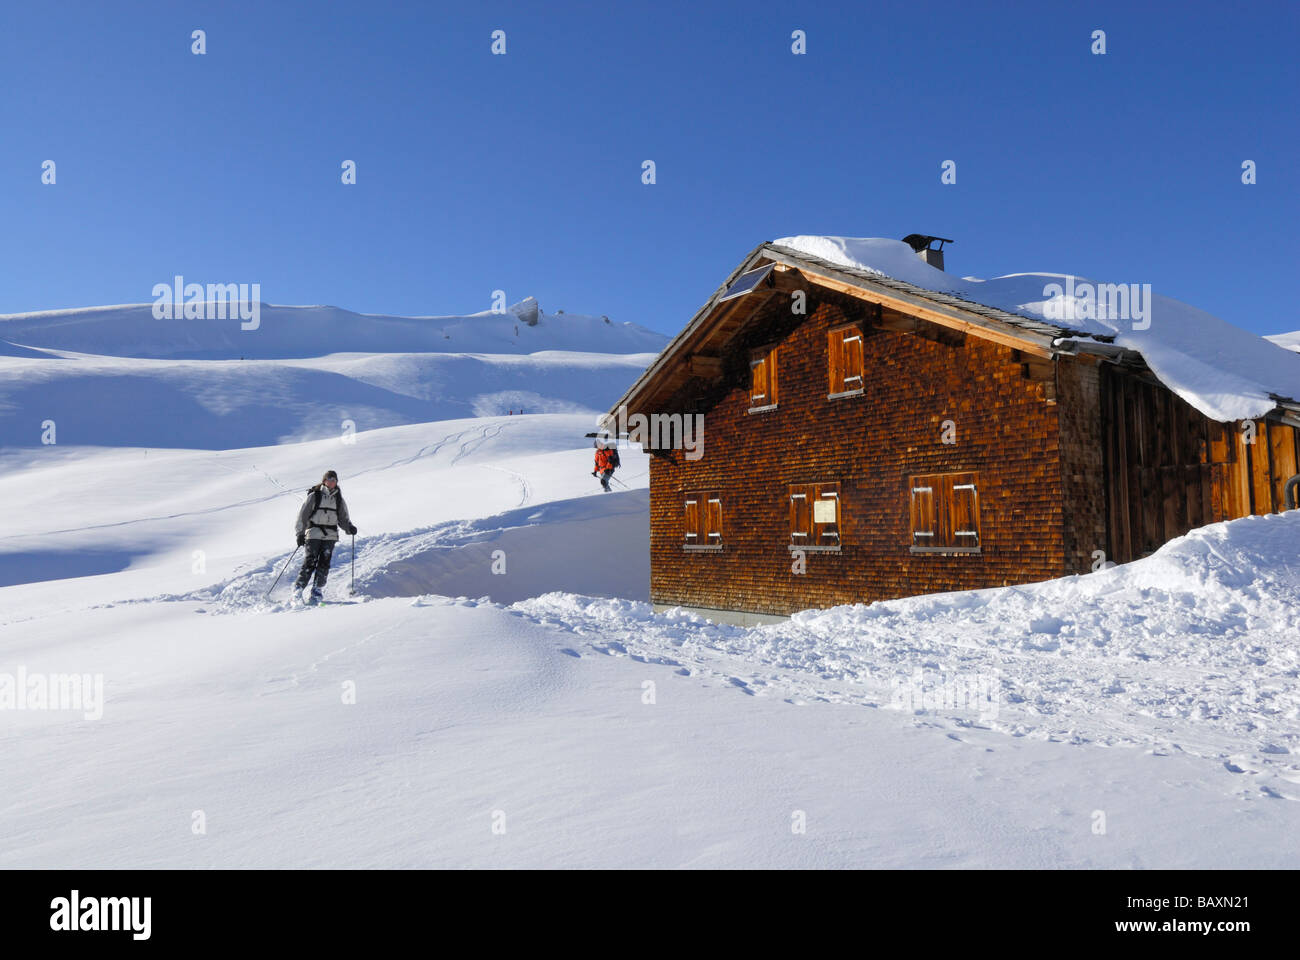 Gli sciatori che arrivano al coperto di neve e rifugio alpino, Schwarzwassertal, Kleinwalsertal, Allgaeu gamma, Allgaeu, Vorarlberg, Austria Foto Stock